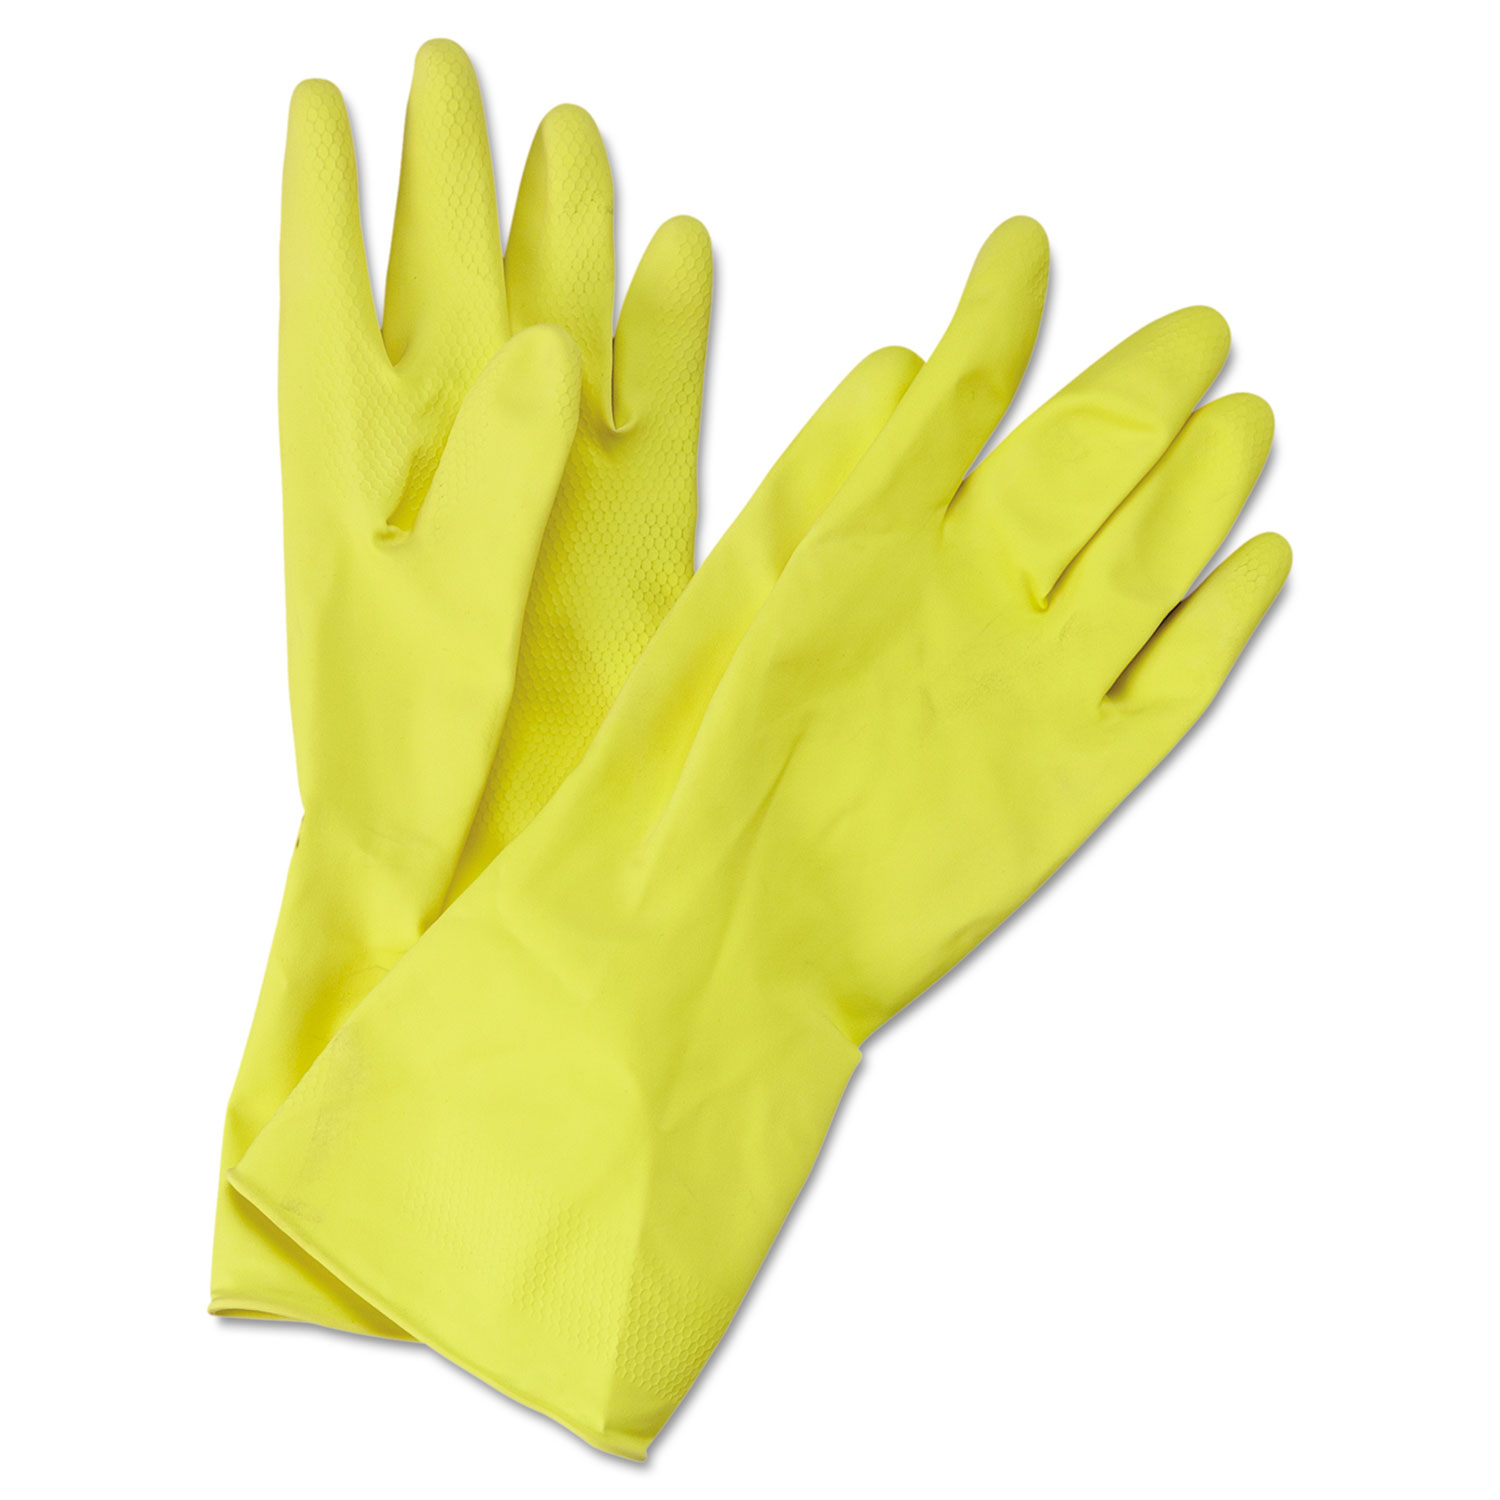  Boardwalk BWK242M Flock-Lined Latex Cleaning Gloves, Medium, Yellow, 12 Pairs (BWK242M) 